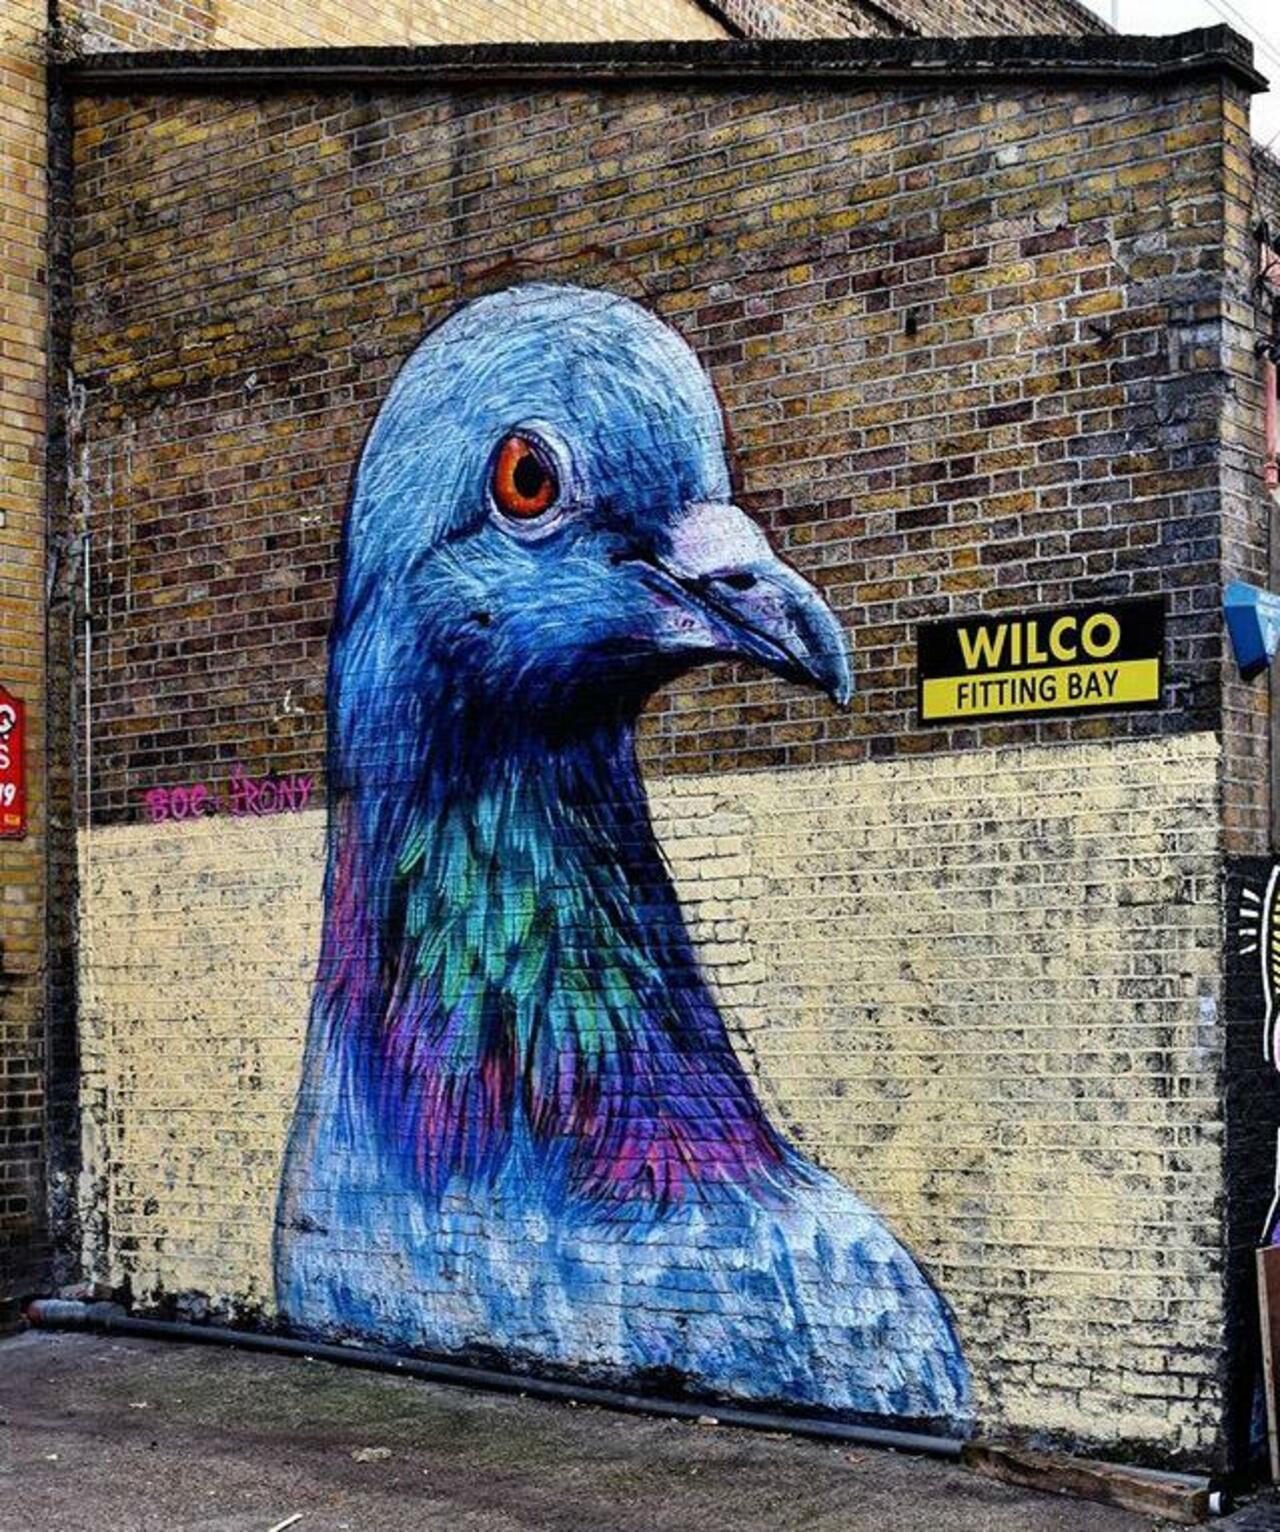 Street Art by Placee Boe & whoamirony in London 

#art #graffiti #mural #streetart http://t.co/7mseNVAuHI googlestreetart chinatoniq